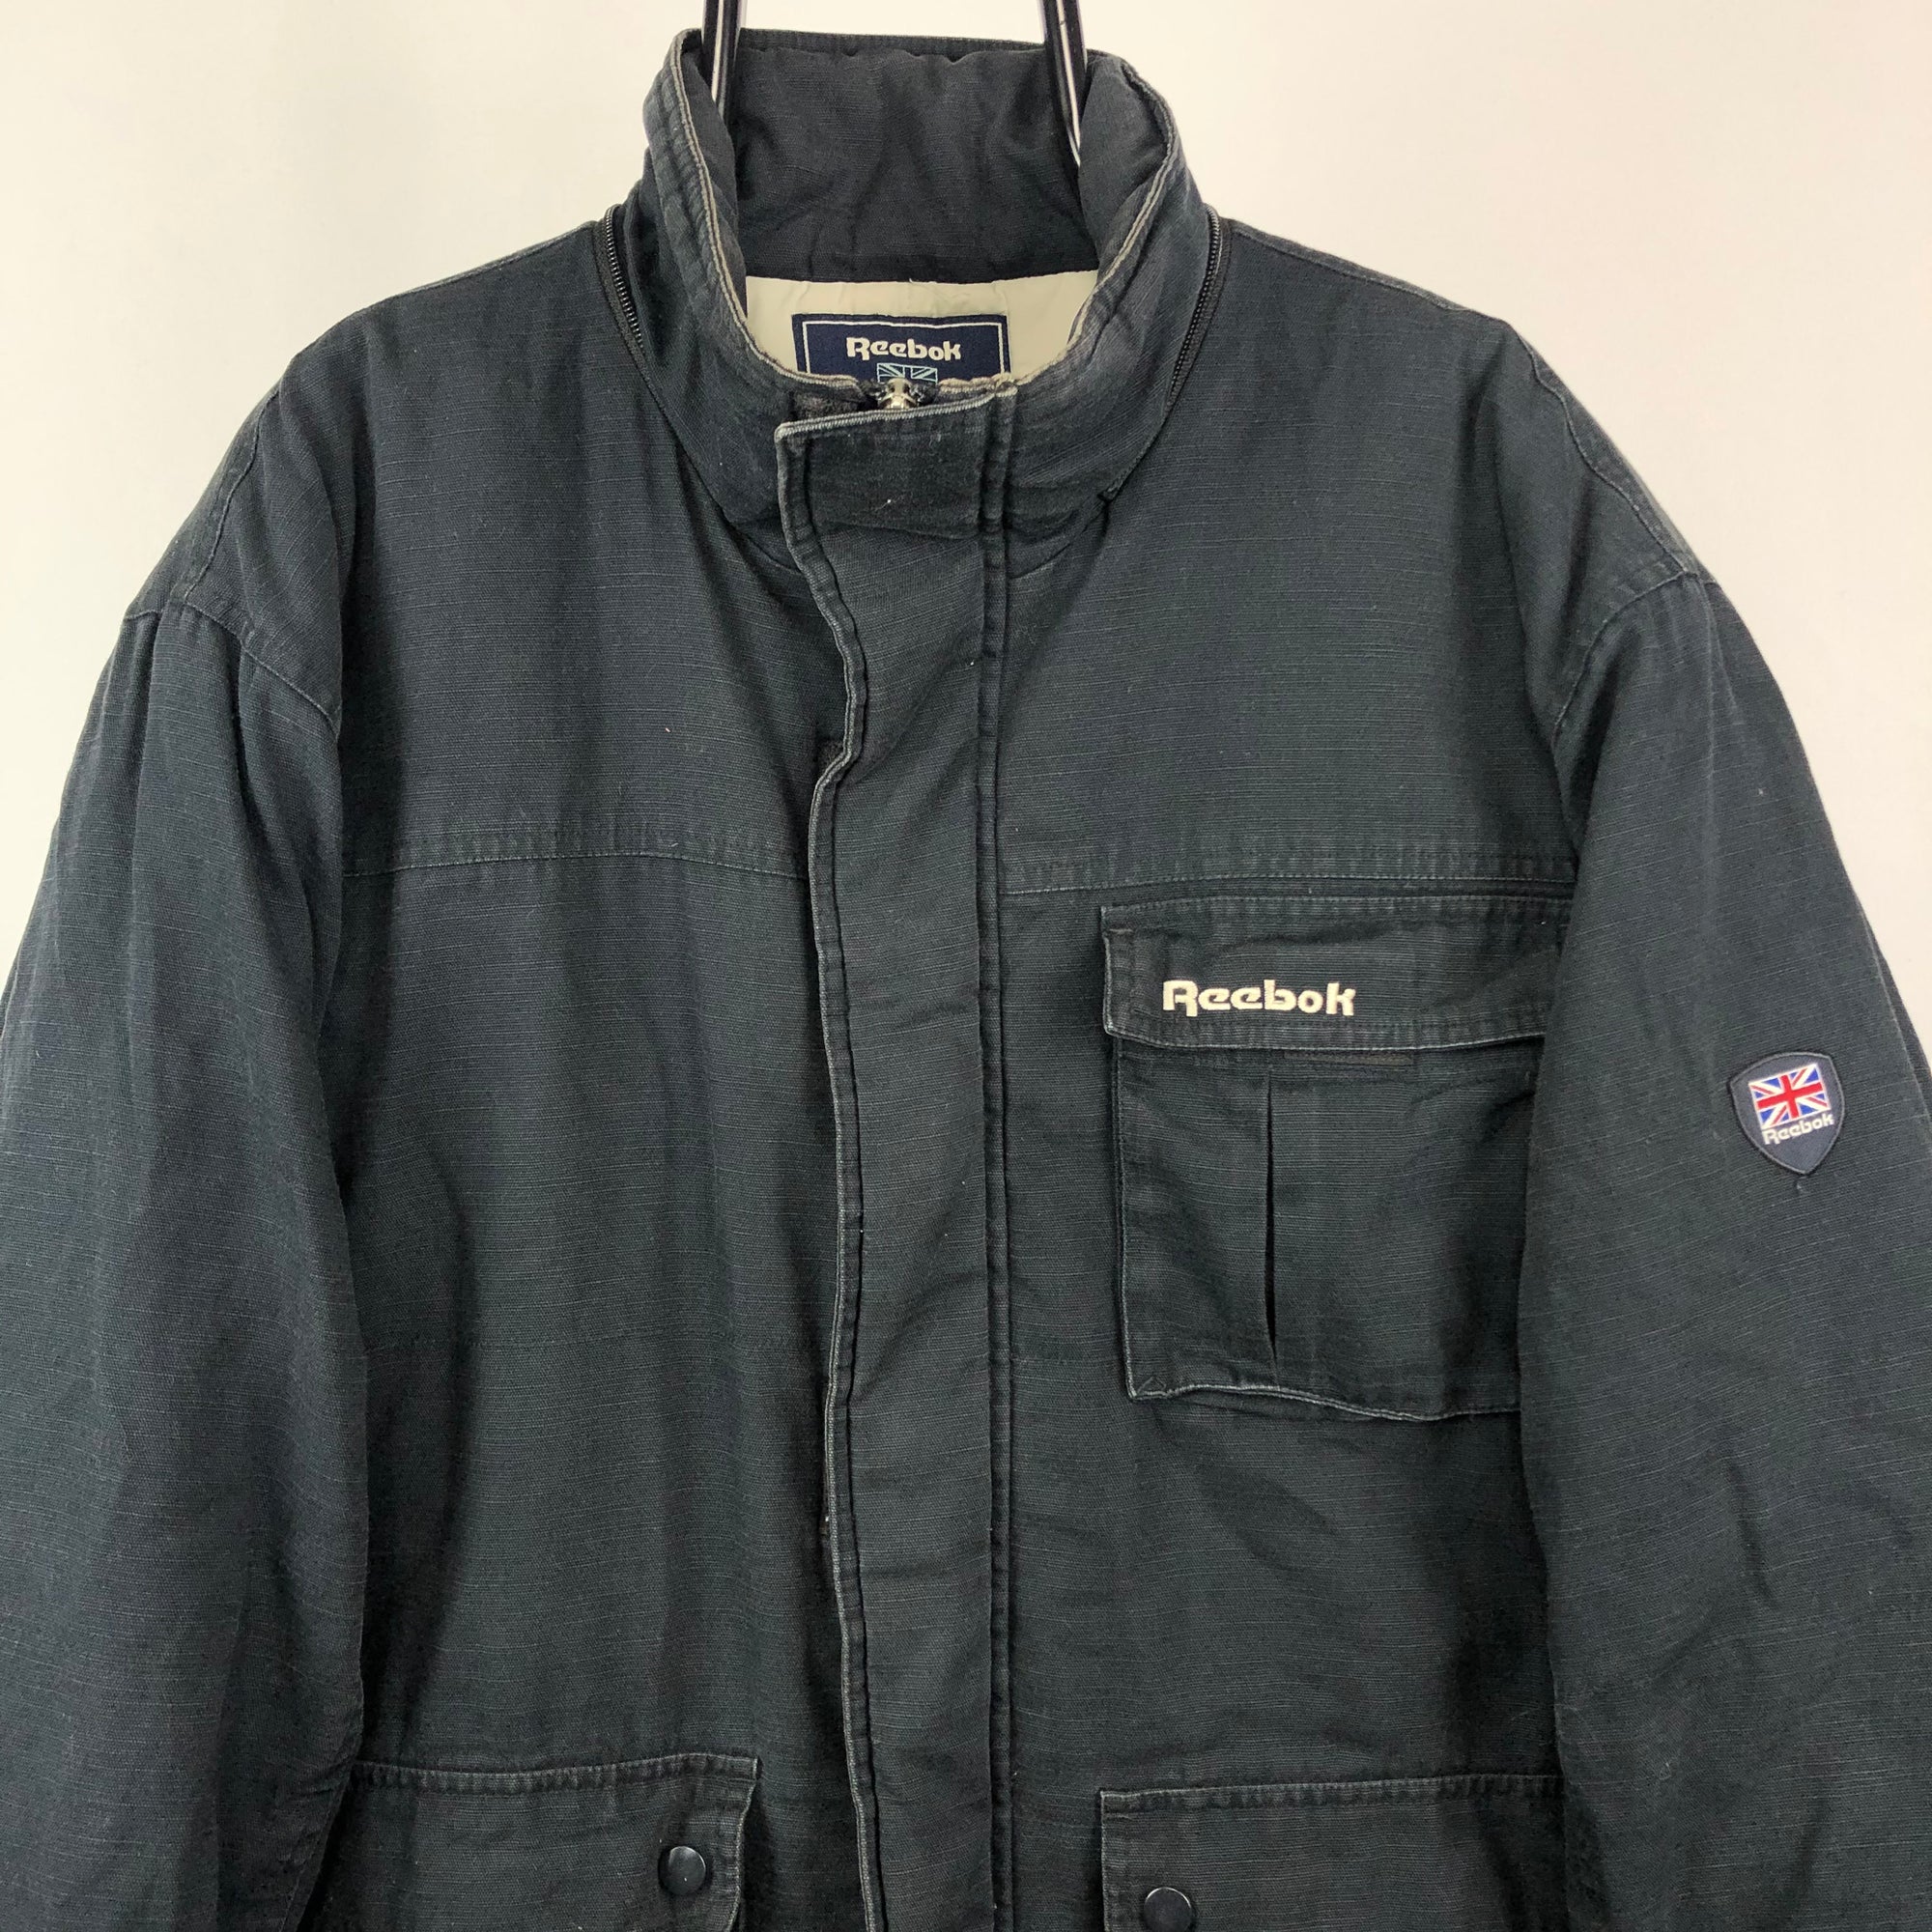 Vintage Reebok Quilted Work Jacket - Men's Large/Women's XL